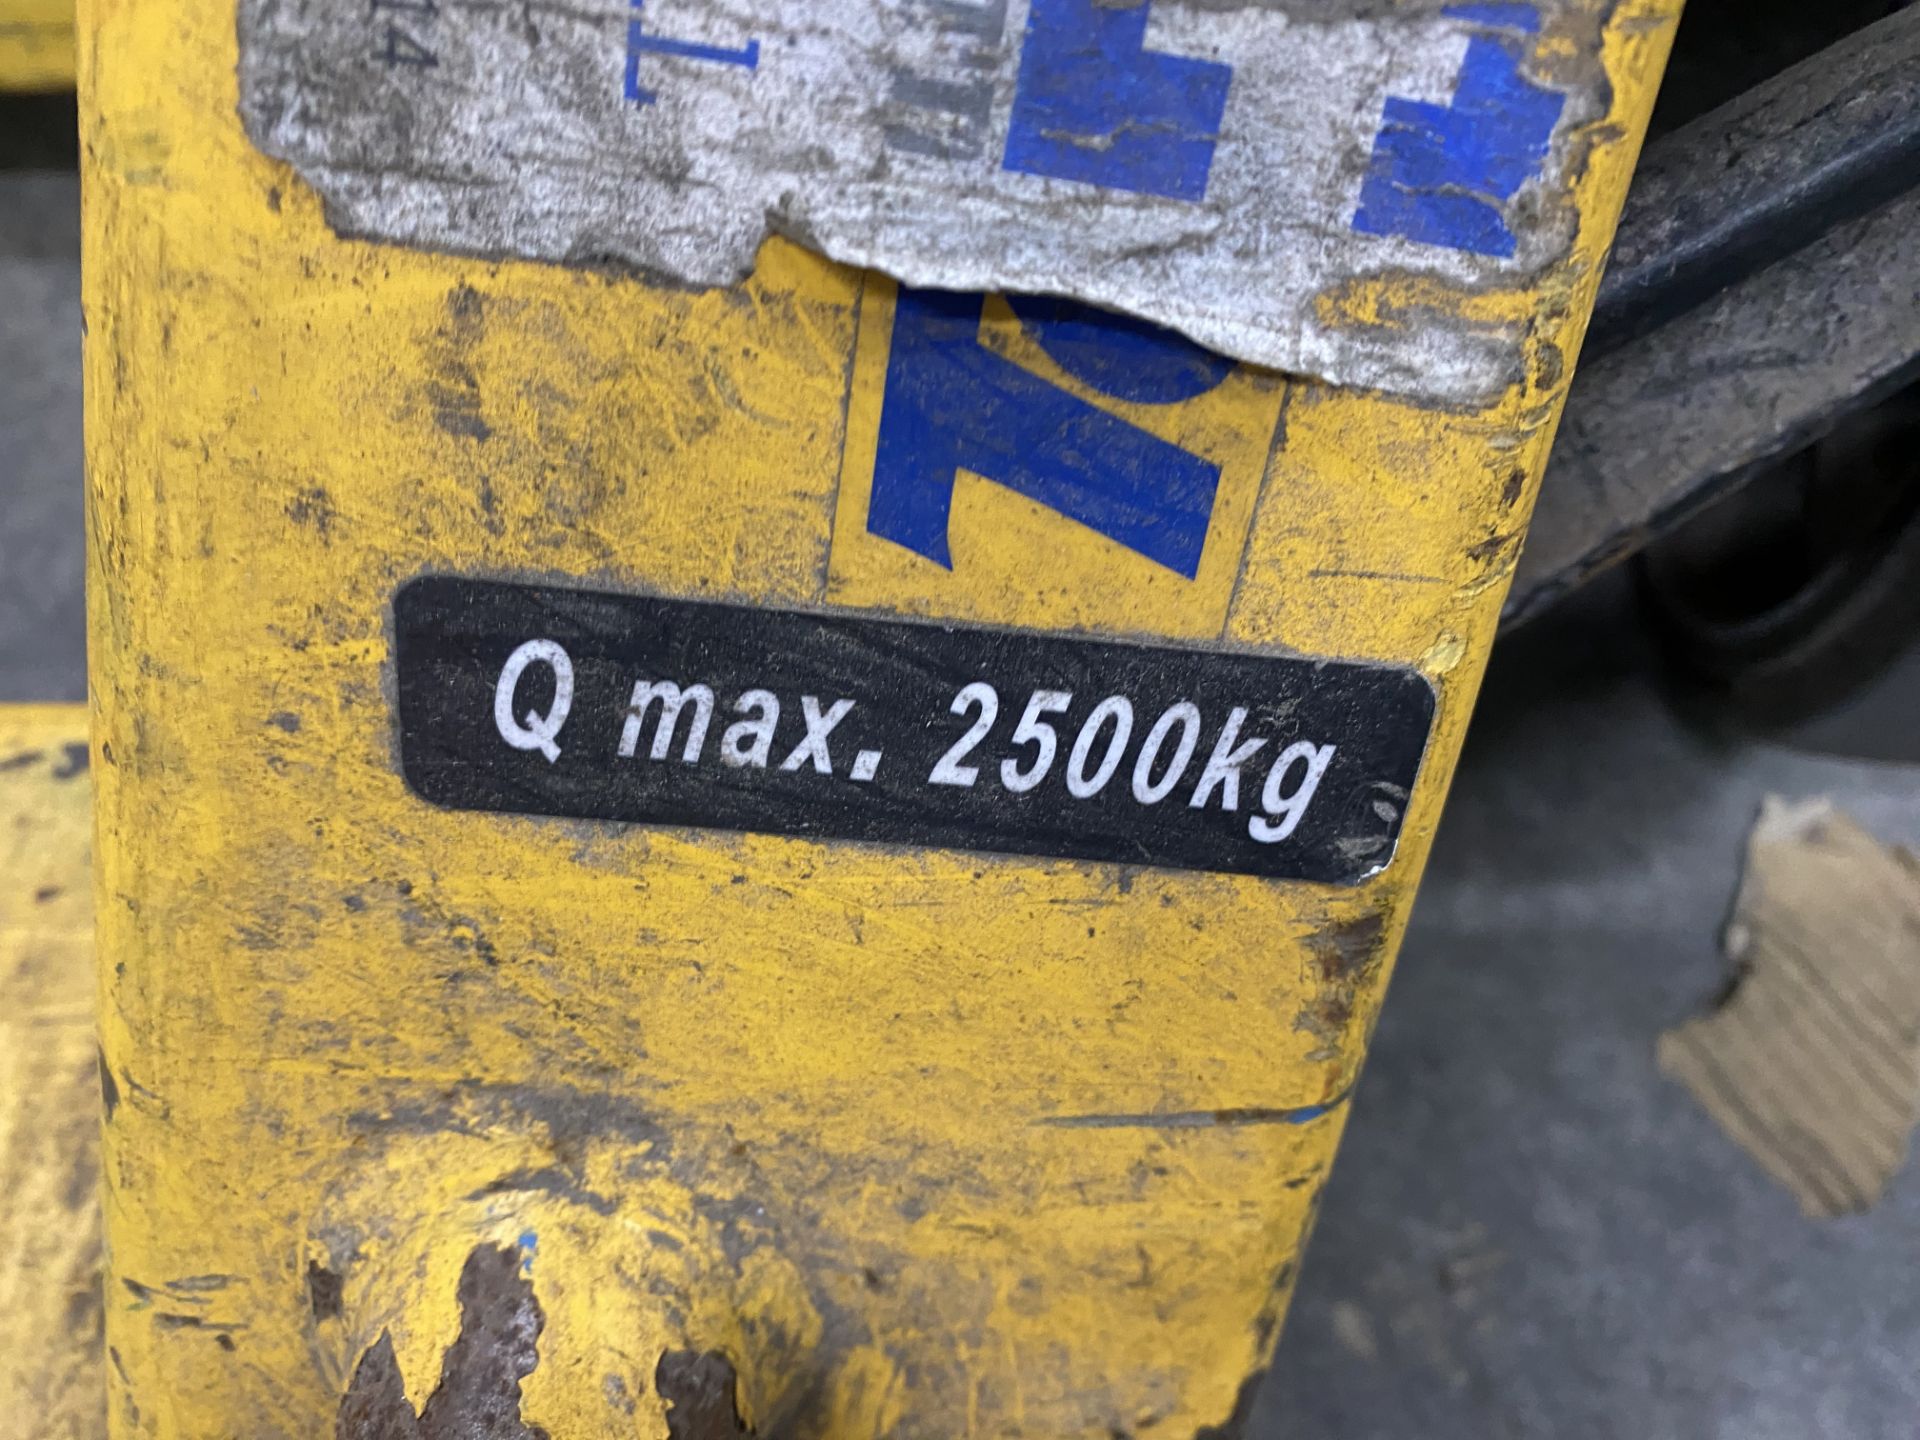 Pallet truck, max 2,500Kg - Image 2 of 3